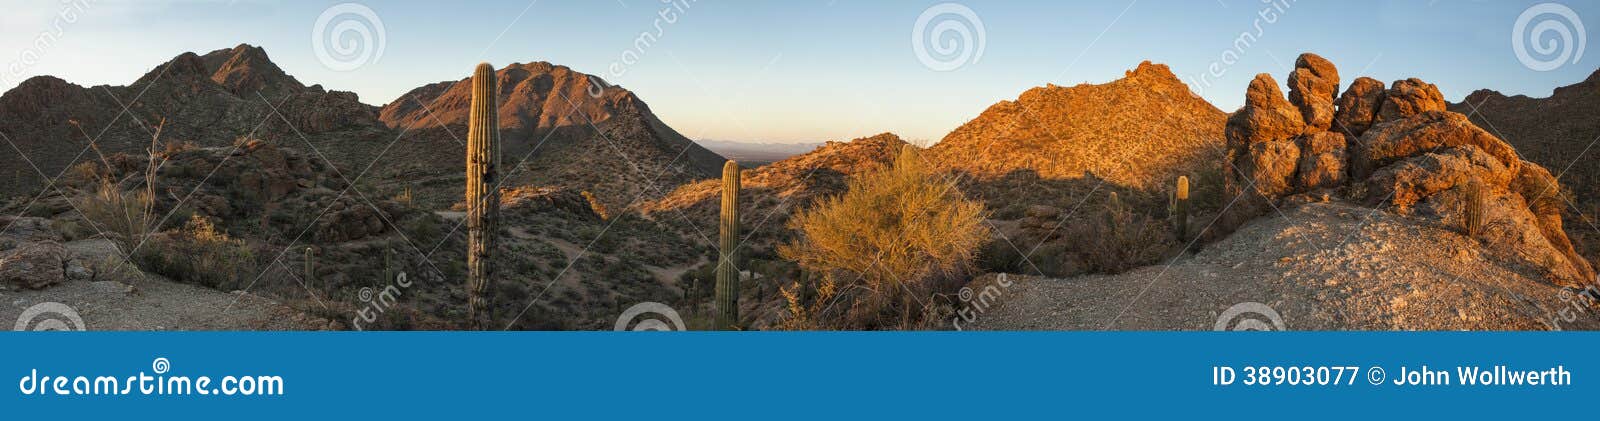 180 degree panorama of sonoran desert